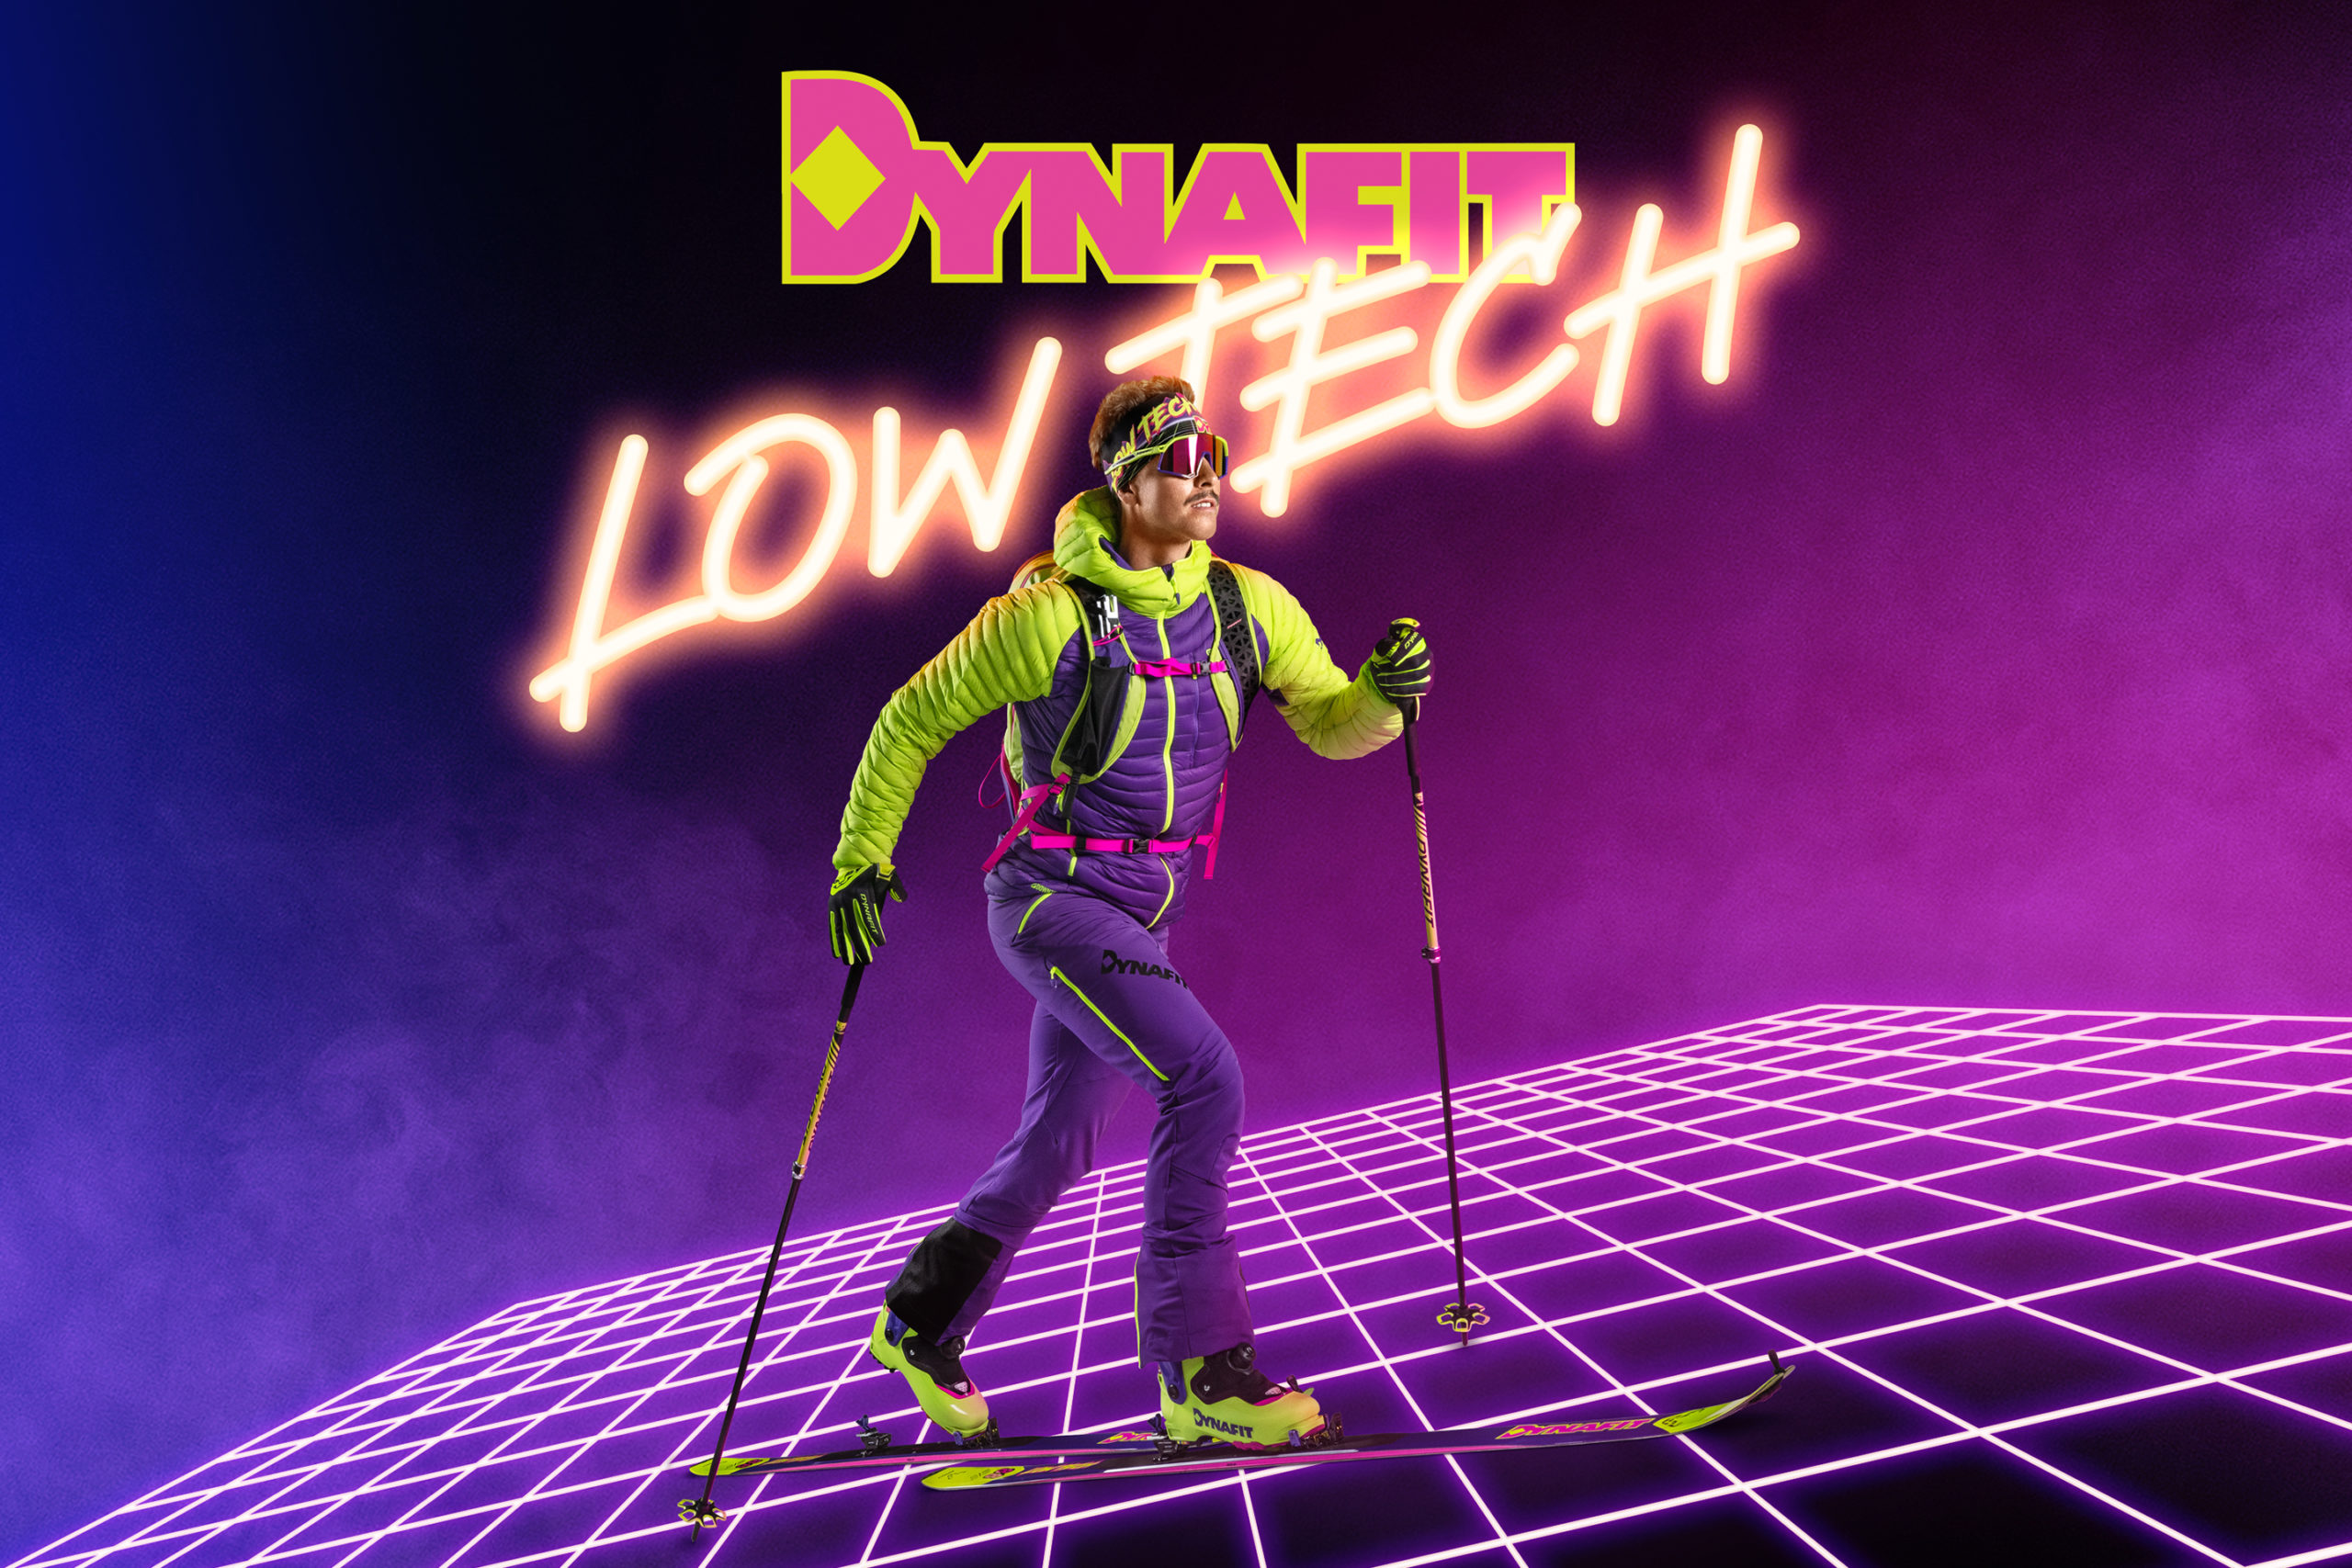 Limited Low Tech Collection: Revival Campaign für DYNAFIT